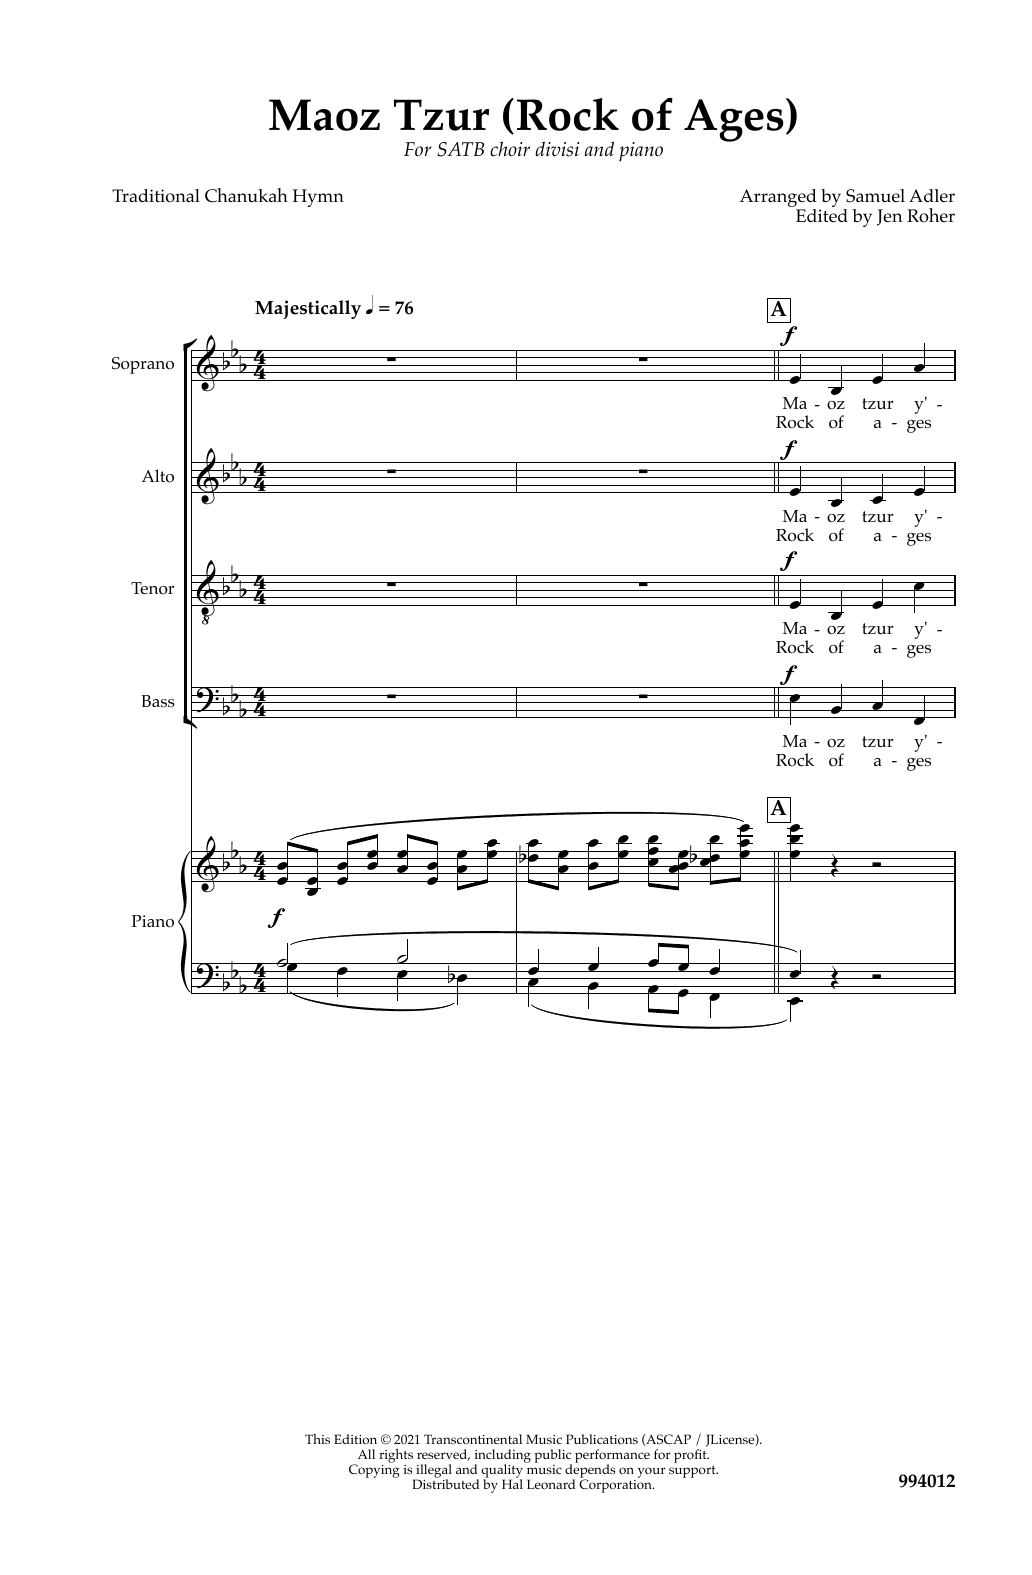 Traditional Chanukah Hymn Maoz Tzur (Rock Of Ages) (arr. Samuel Adler) sheet music notes and chords arranged for SATB Choir